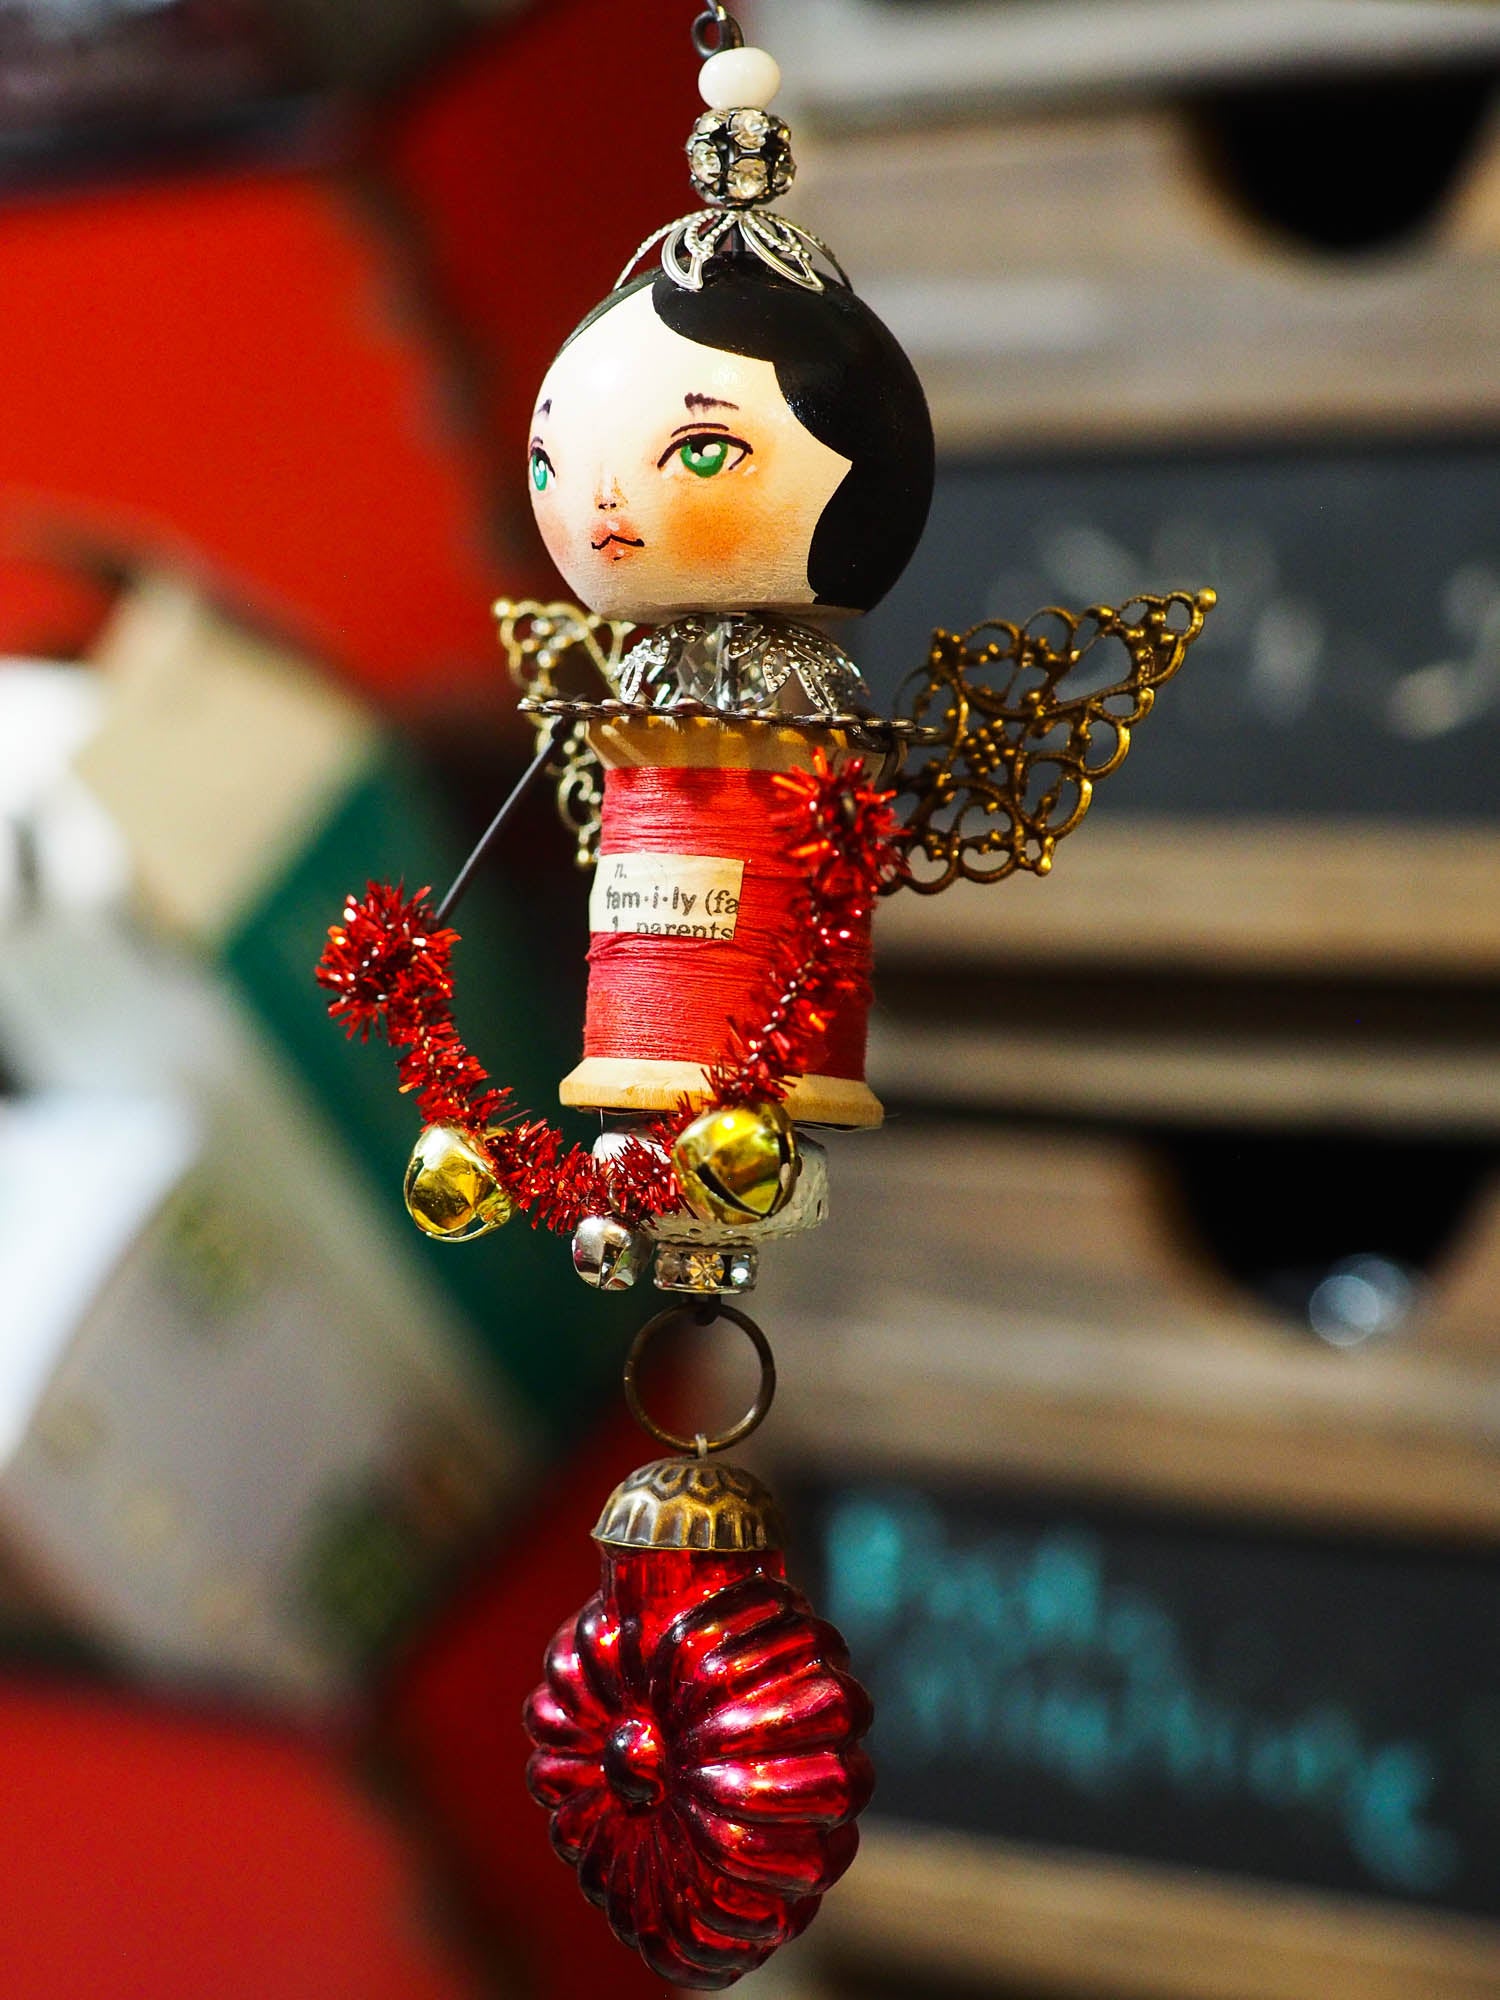 ANGEL No. 5 - An original handmade Christmas tree ornament by Danita, Original Art by Danita Art